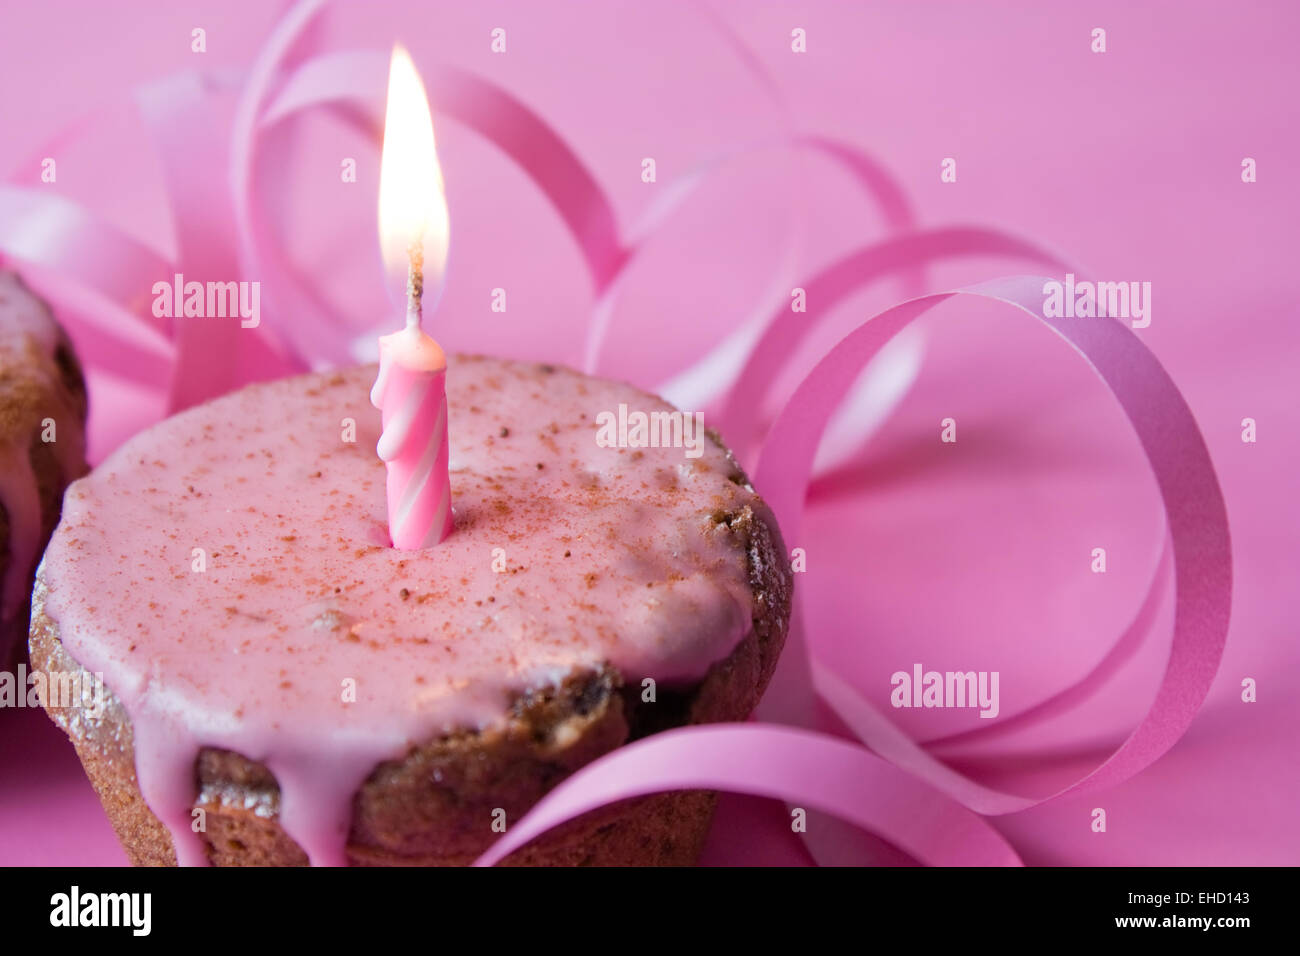 Pirottini mit Kerze - Muffin con candela Foto Stock